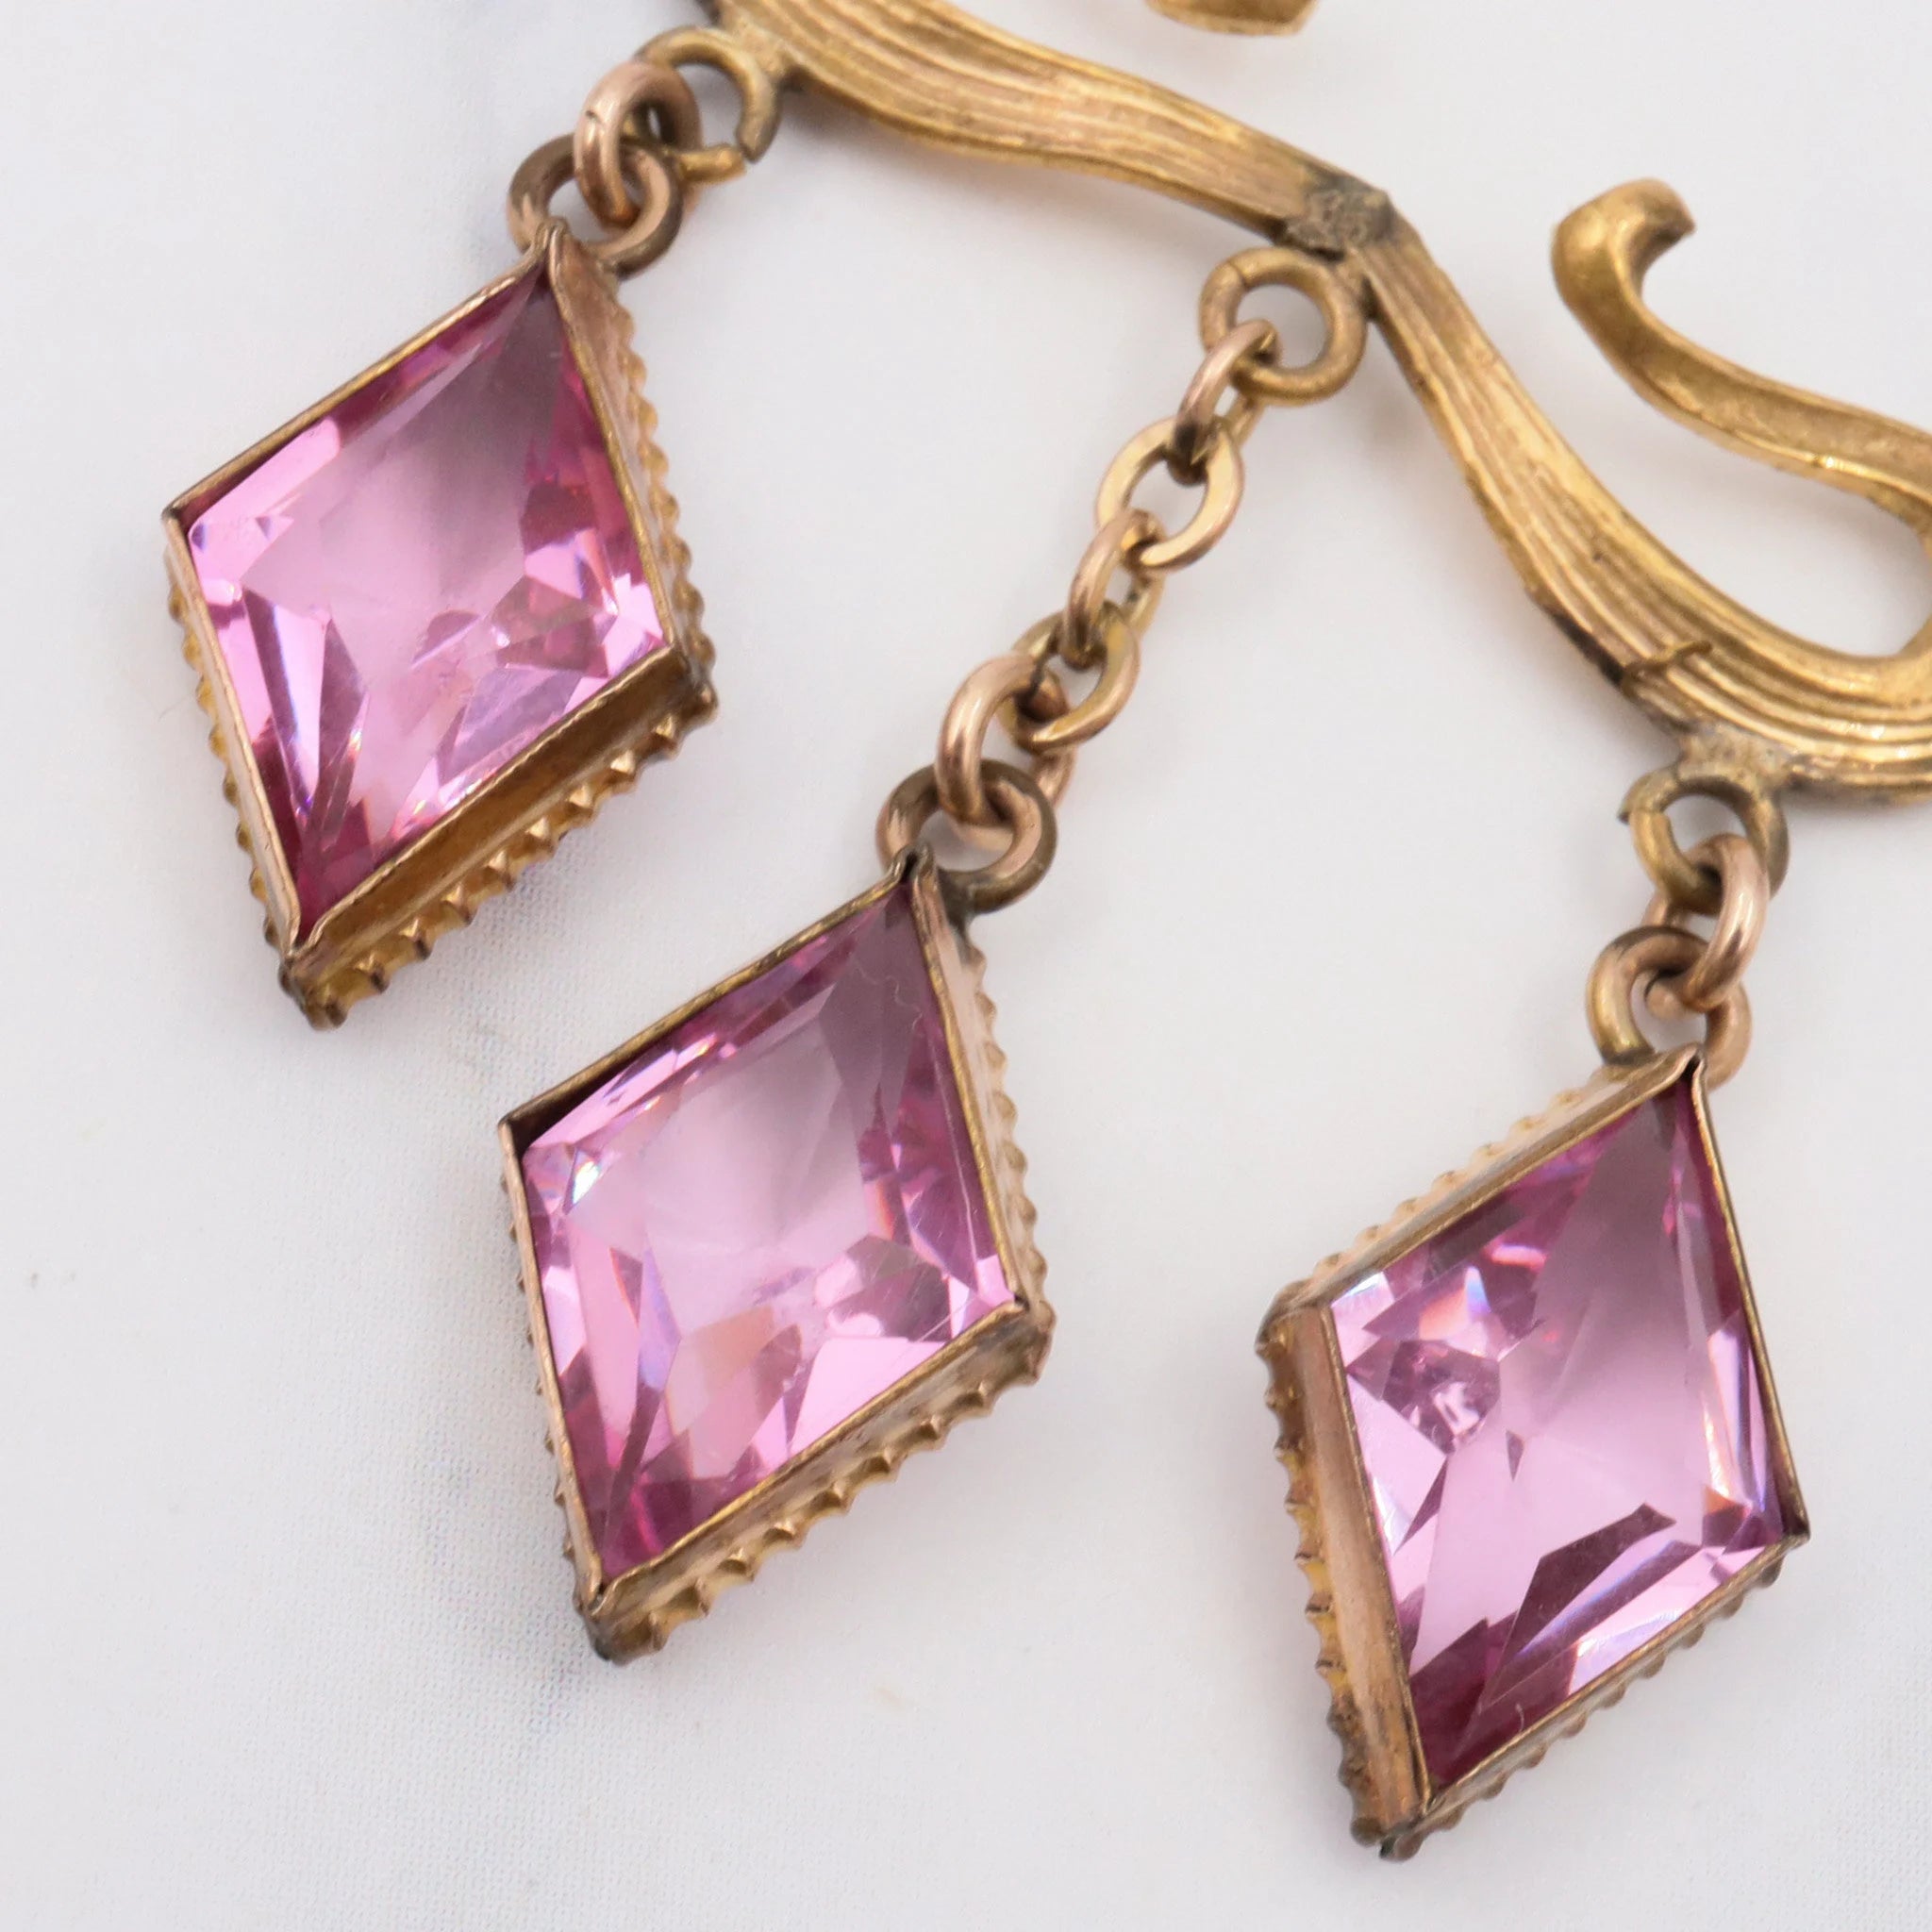 Antique Victorian gold filled pink tourmaline glass festoon necklace, 15.5